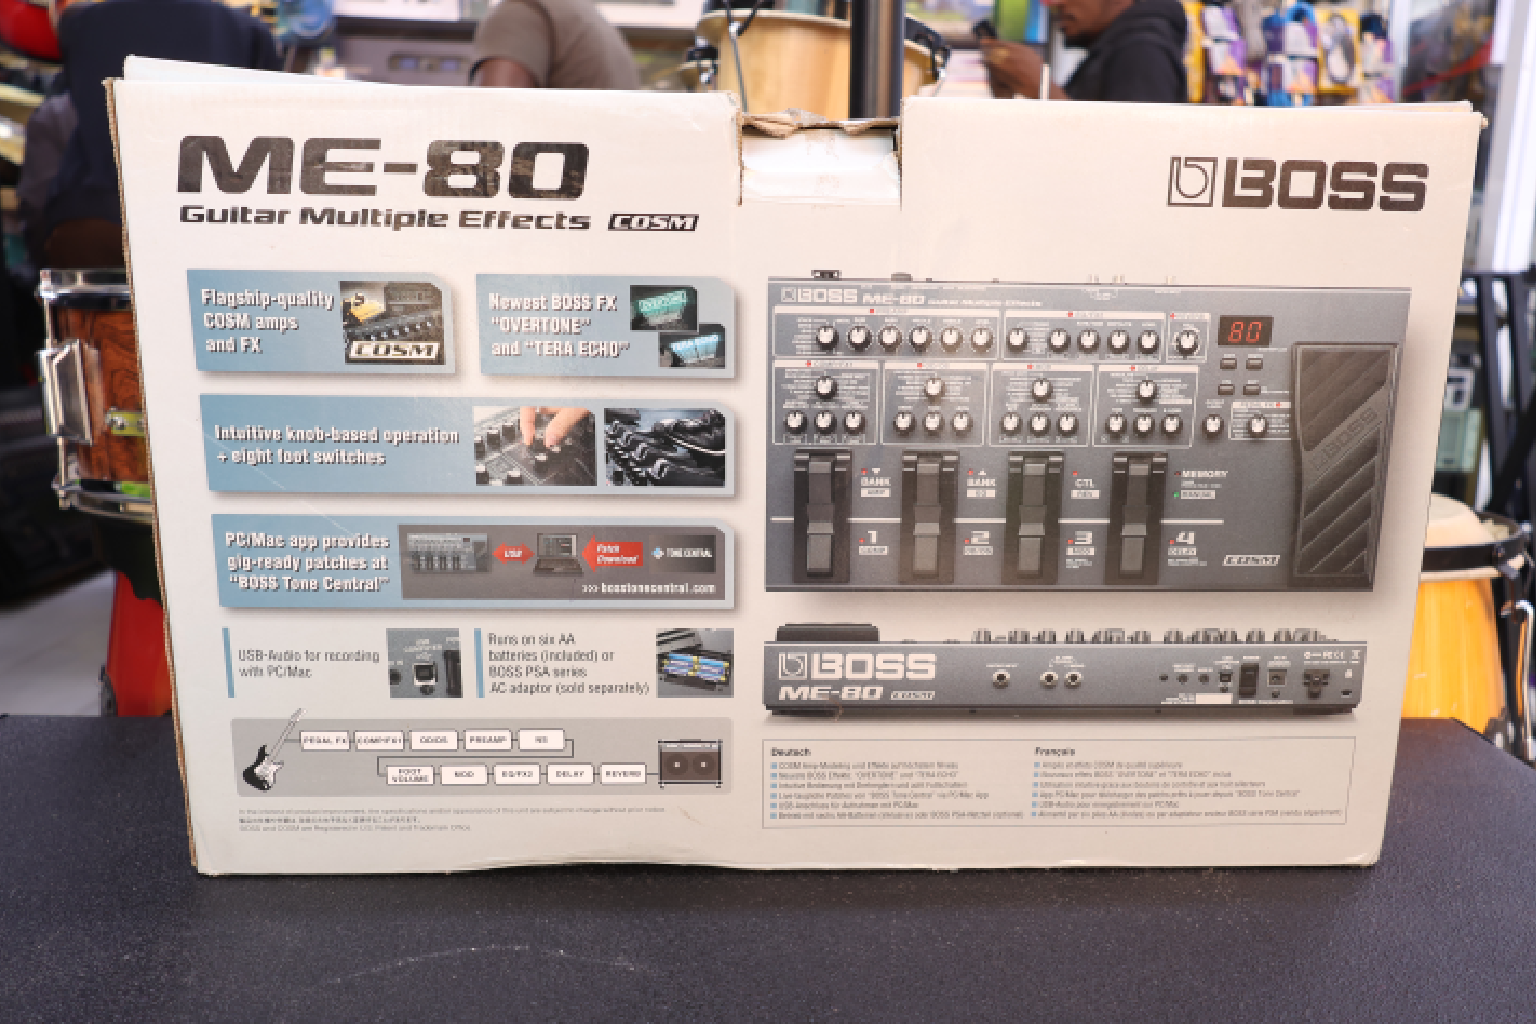 ME-80 sound samples